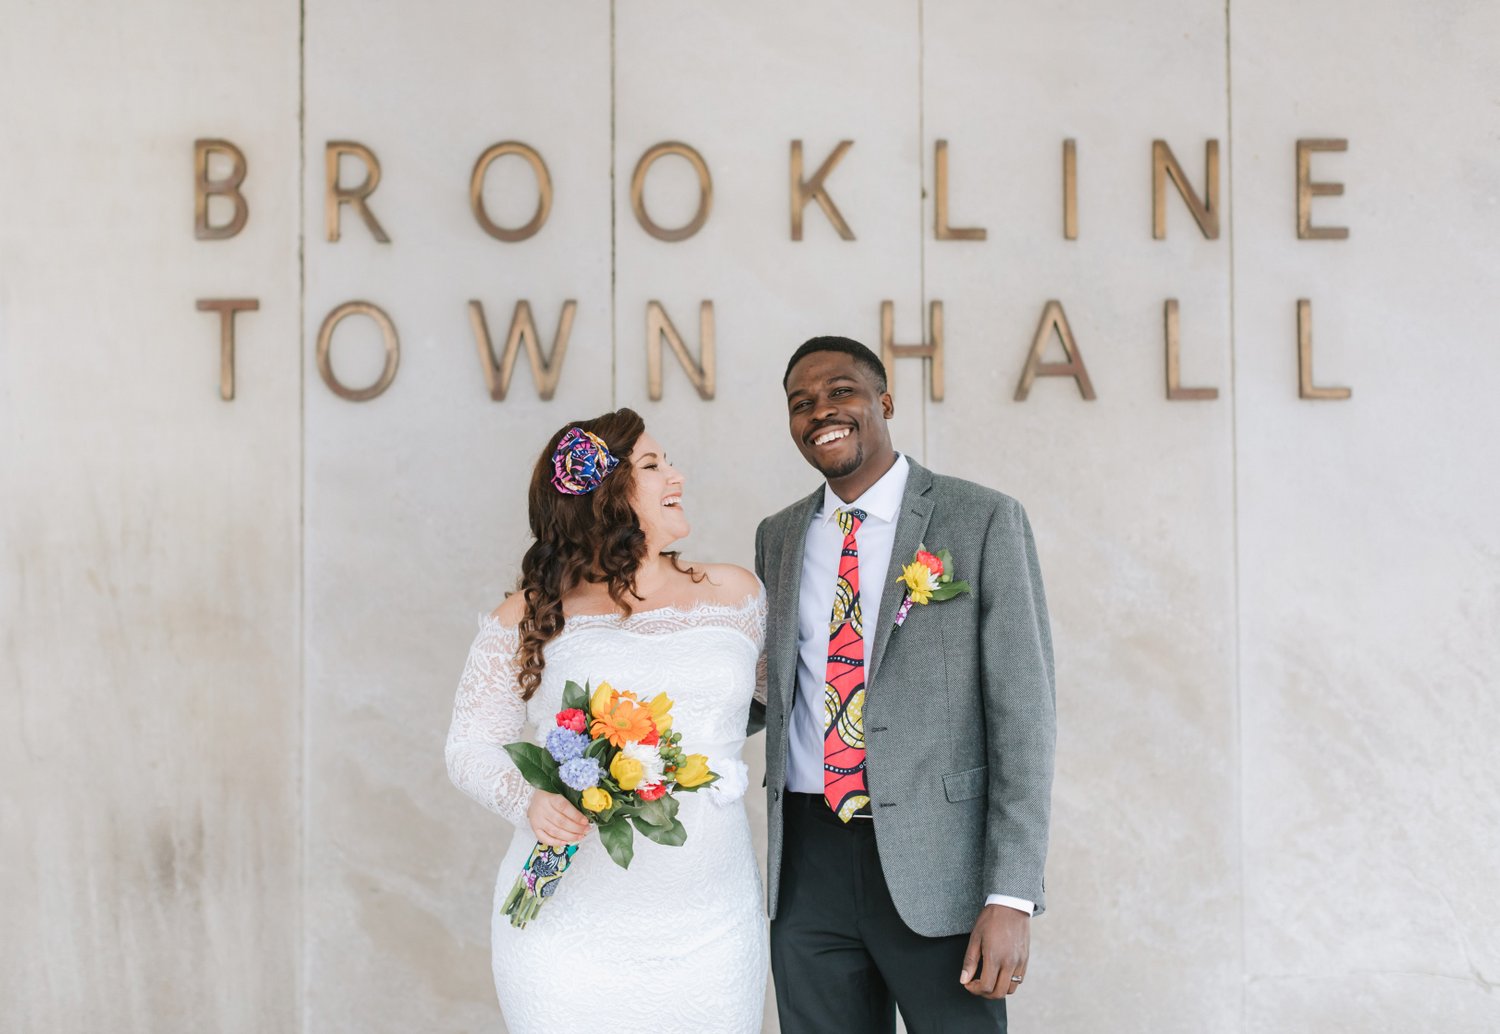 Zambian-African-Boston-Brookline-City-Hall-Wedding-3.jpg